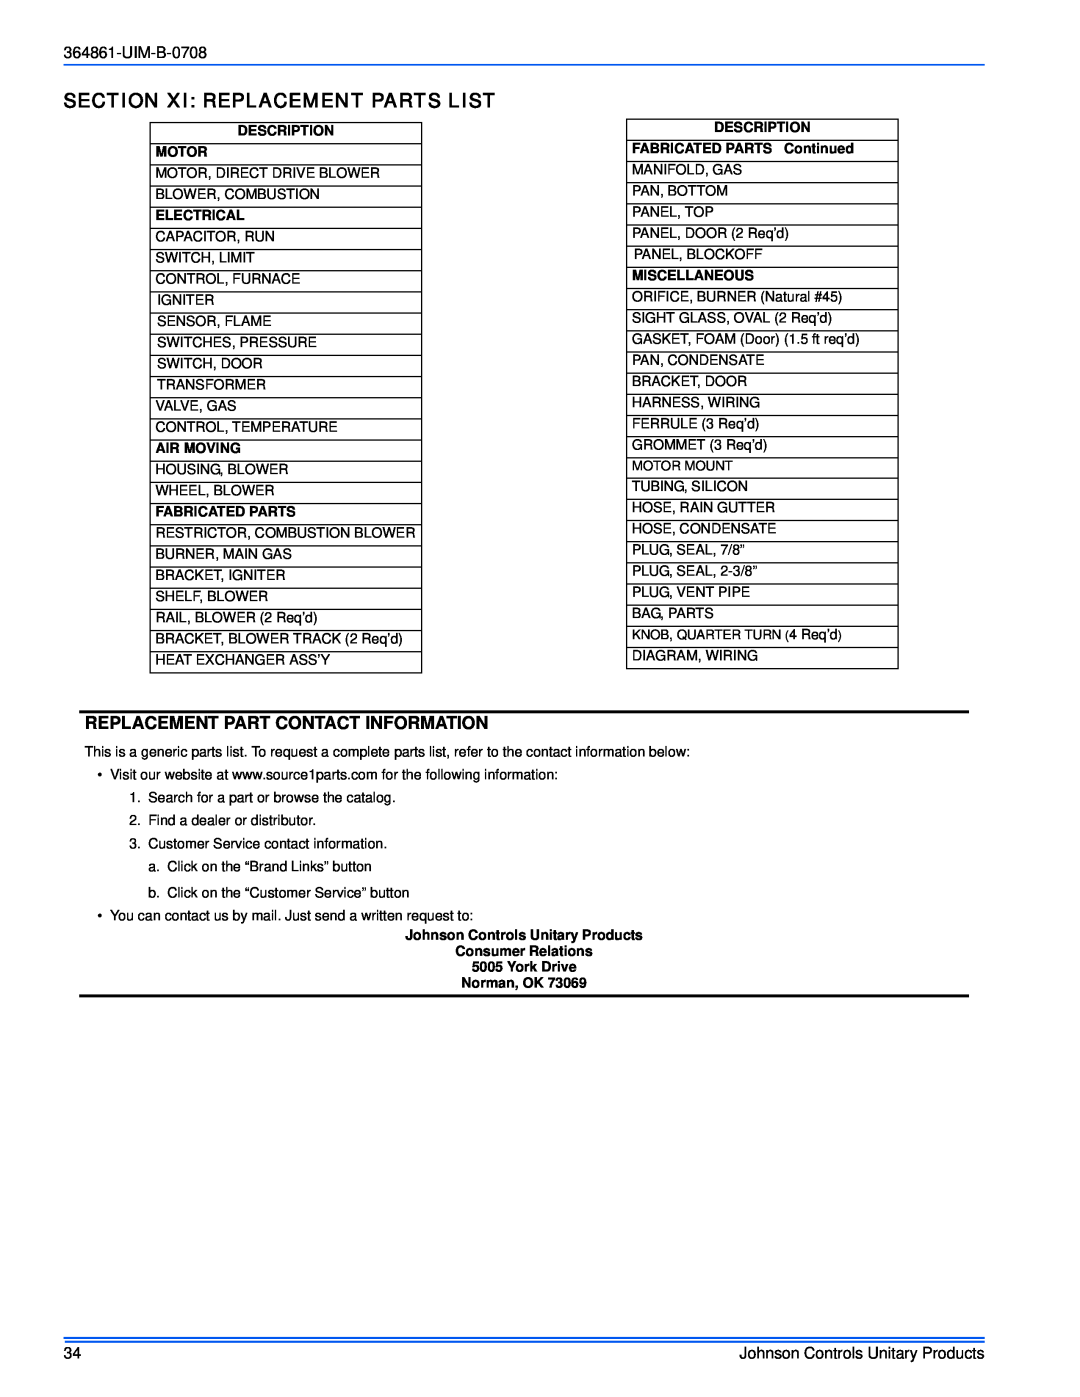 Johnson Controls TG9S*MP Section Xi Replacement Parts List, Replacement Part Contact Information, Description Motor 